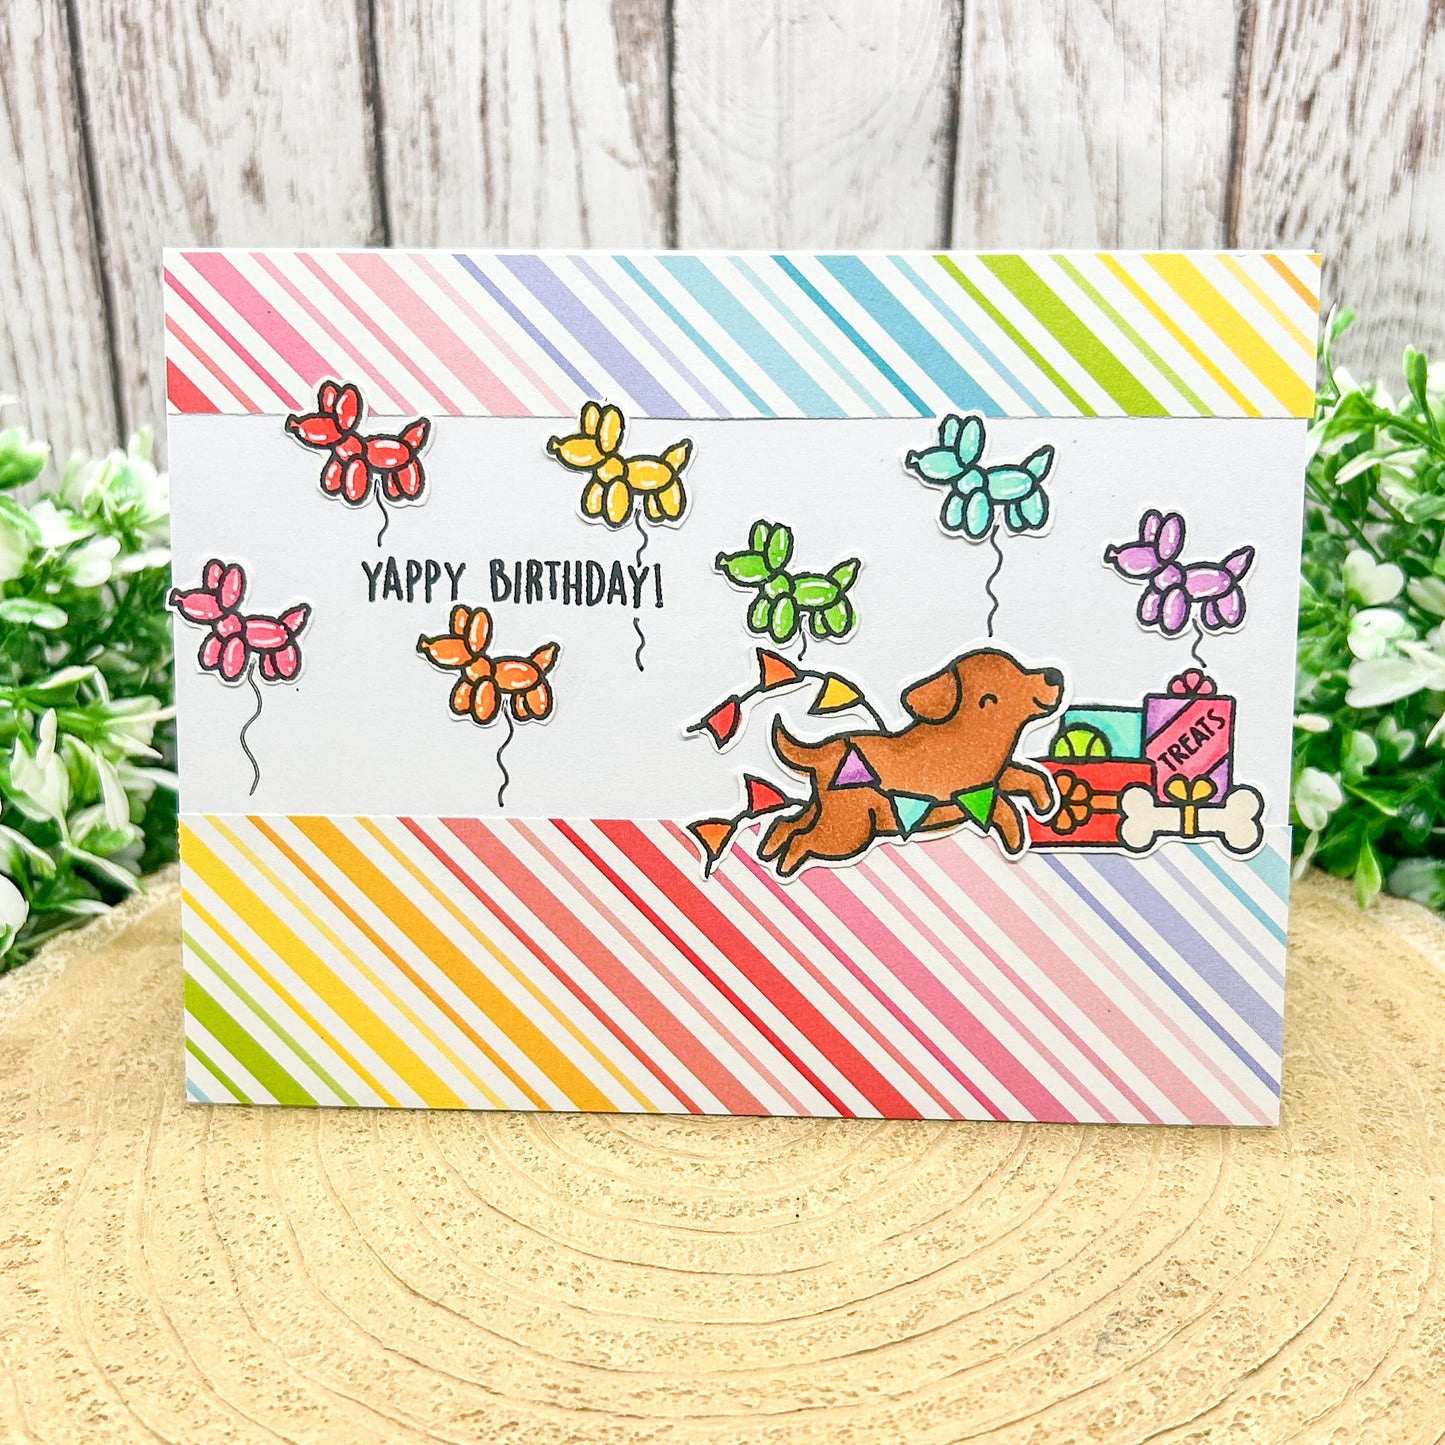 Yappy Birthday Balloon Dogs Handmade Birthday Card